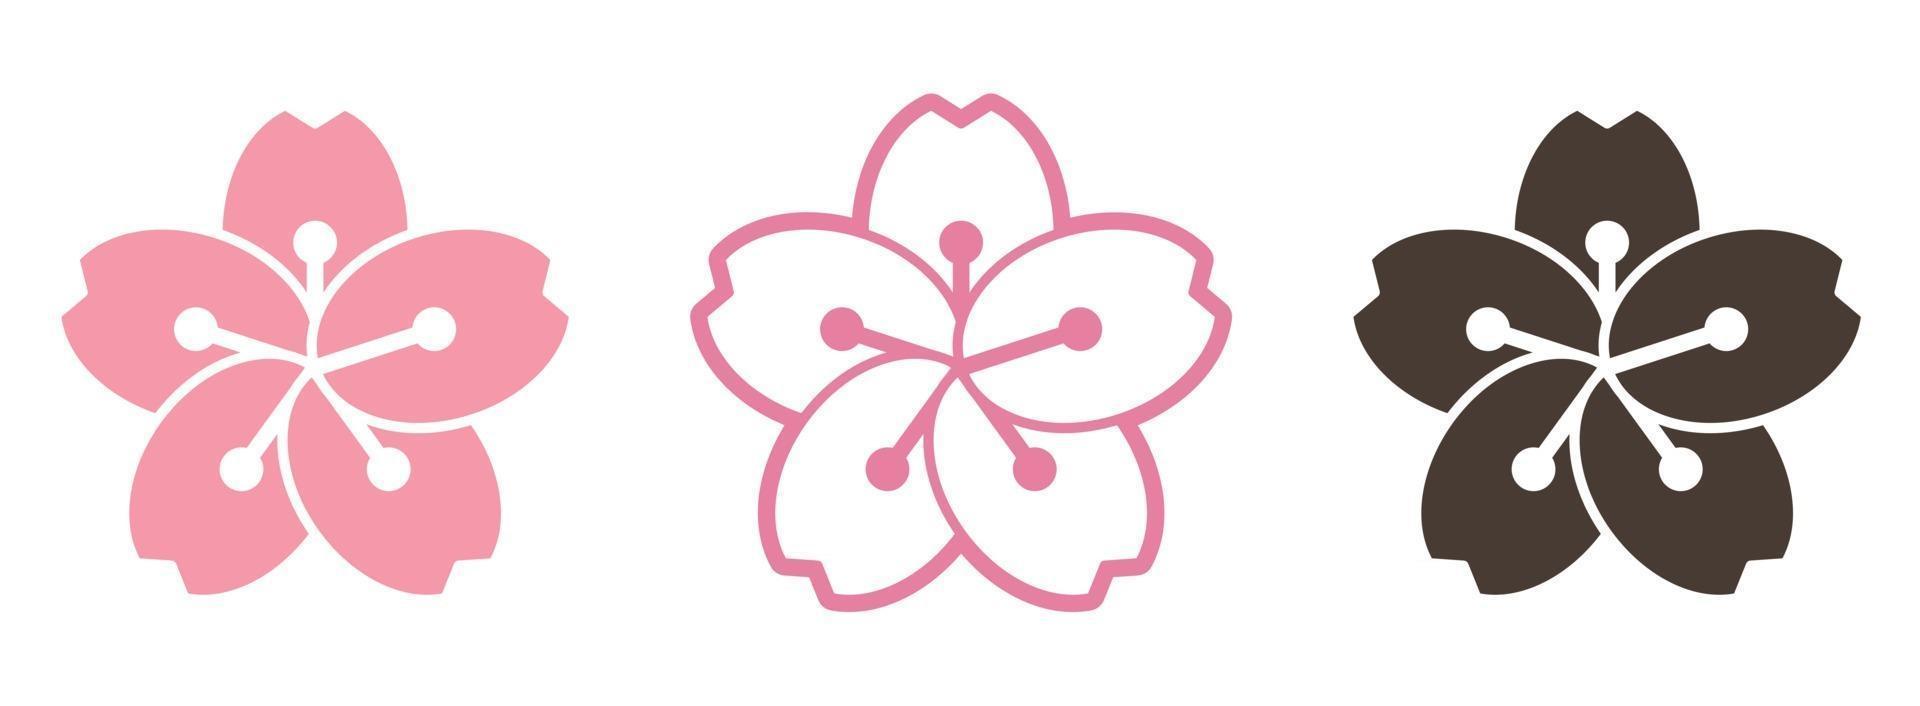 sakura bloem pictogram silhouet vector